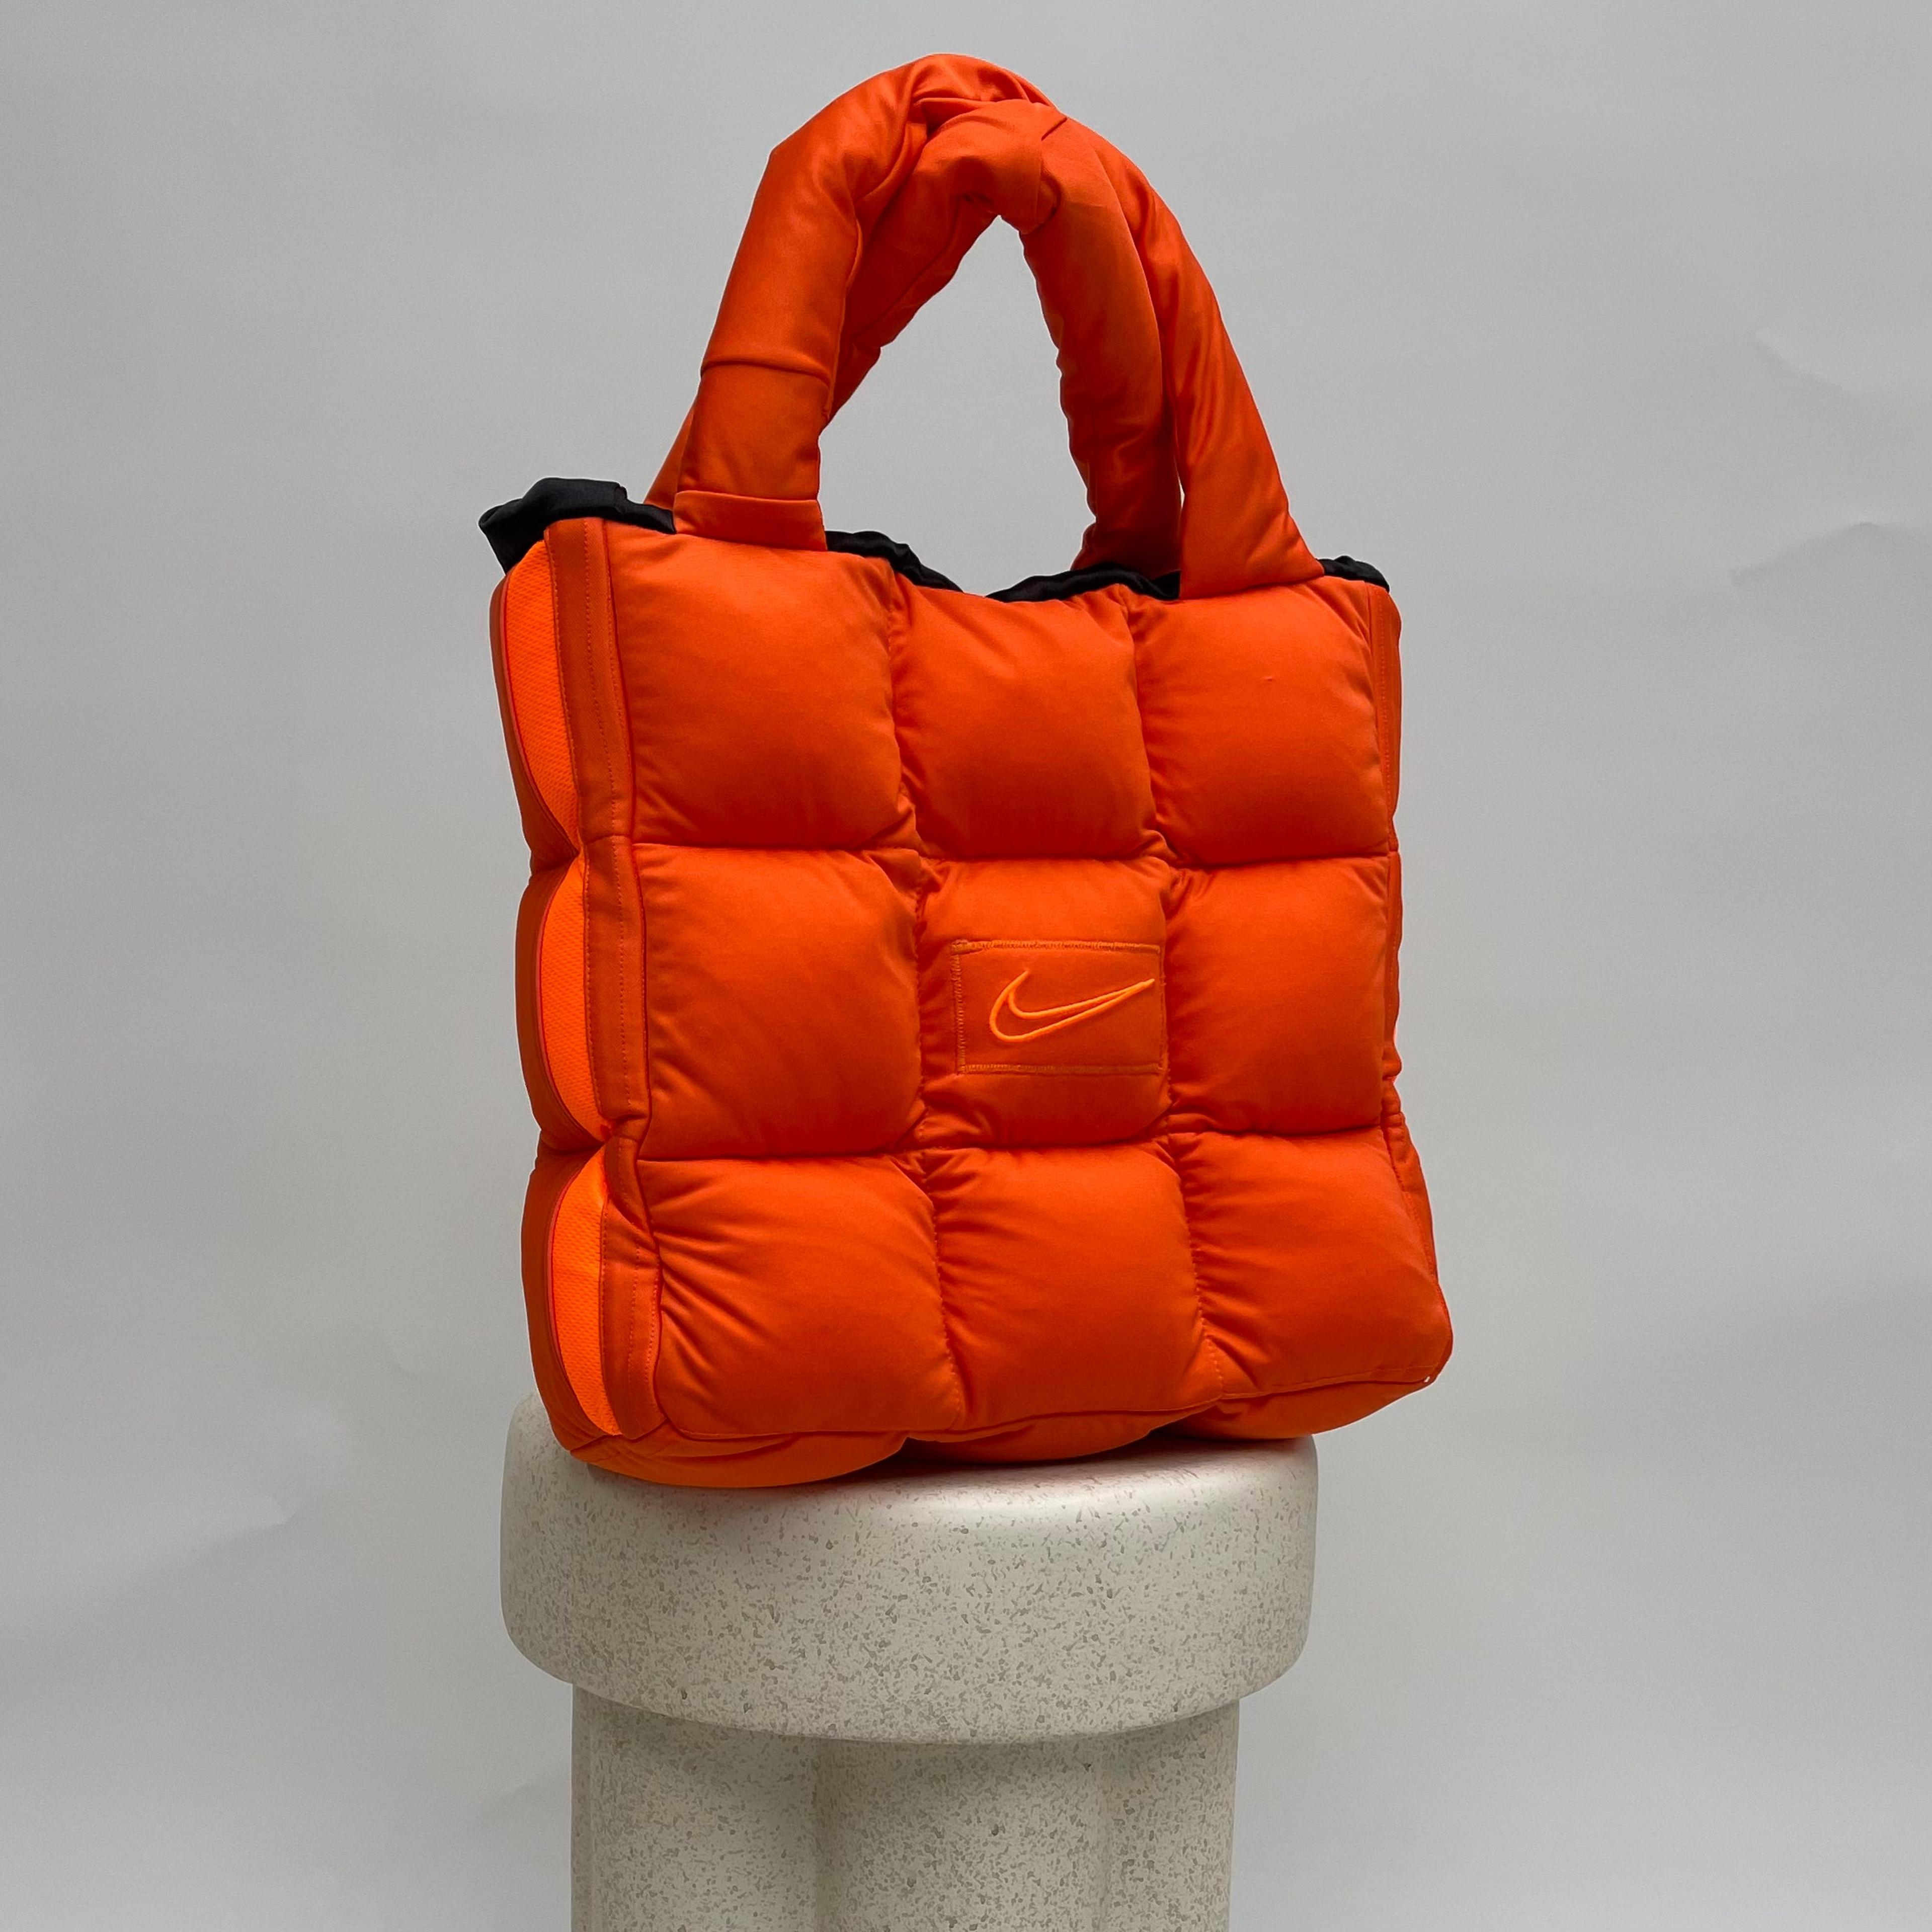 Alternate View 1 of Boss Up Orange Puffer Bag